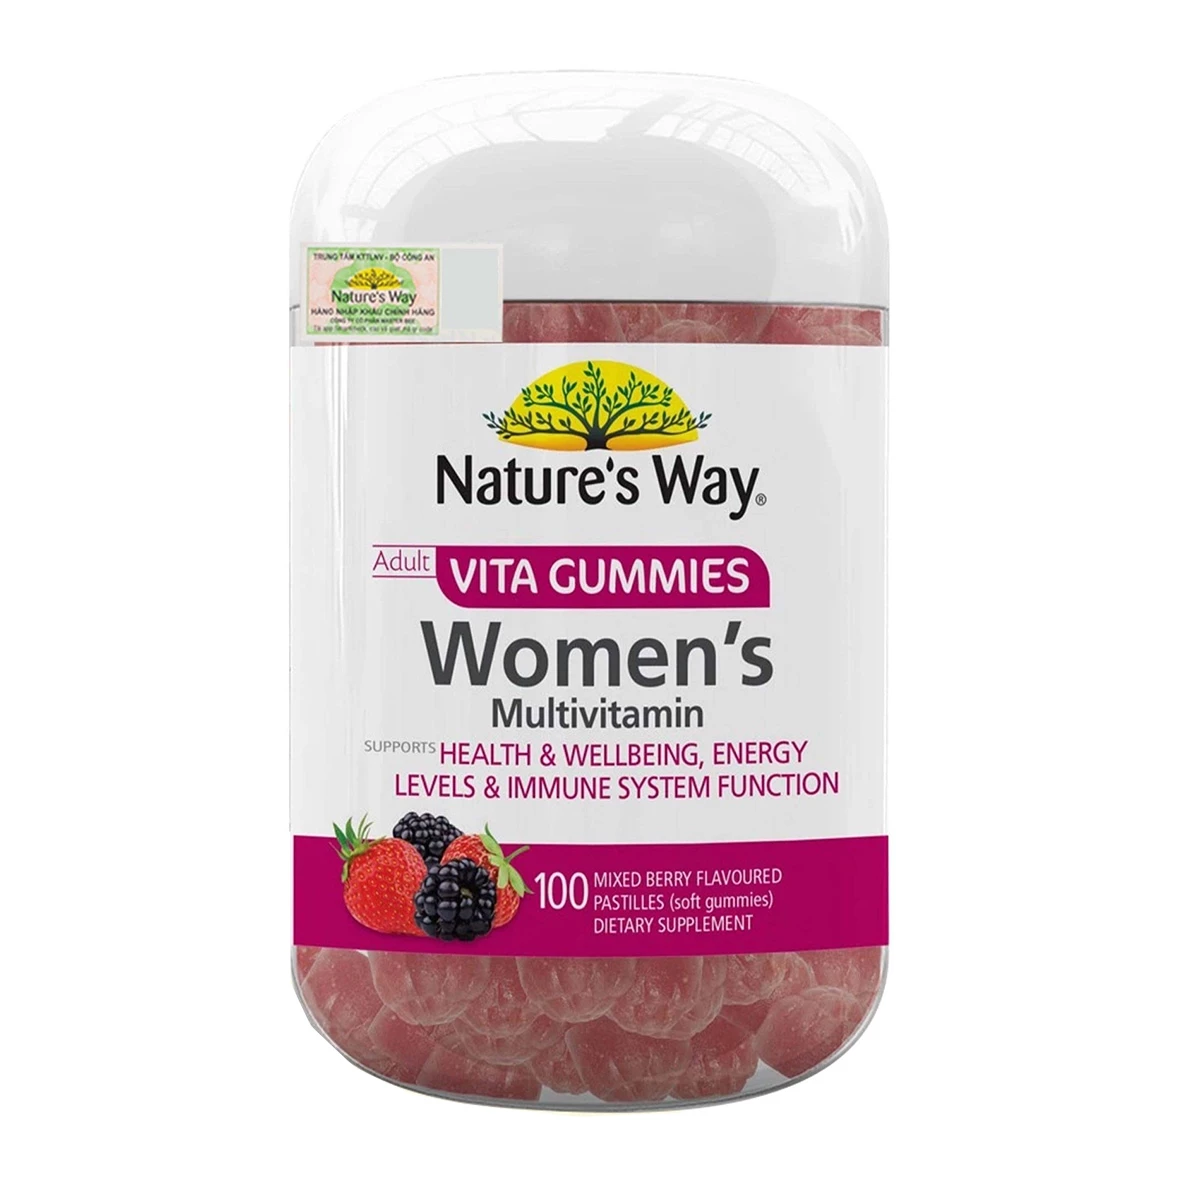 Nature's Way Adult Vita Gummies Women's Multivitamin - Vitamin tổng hợp cho phụ nữ